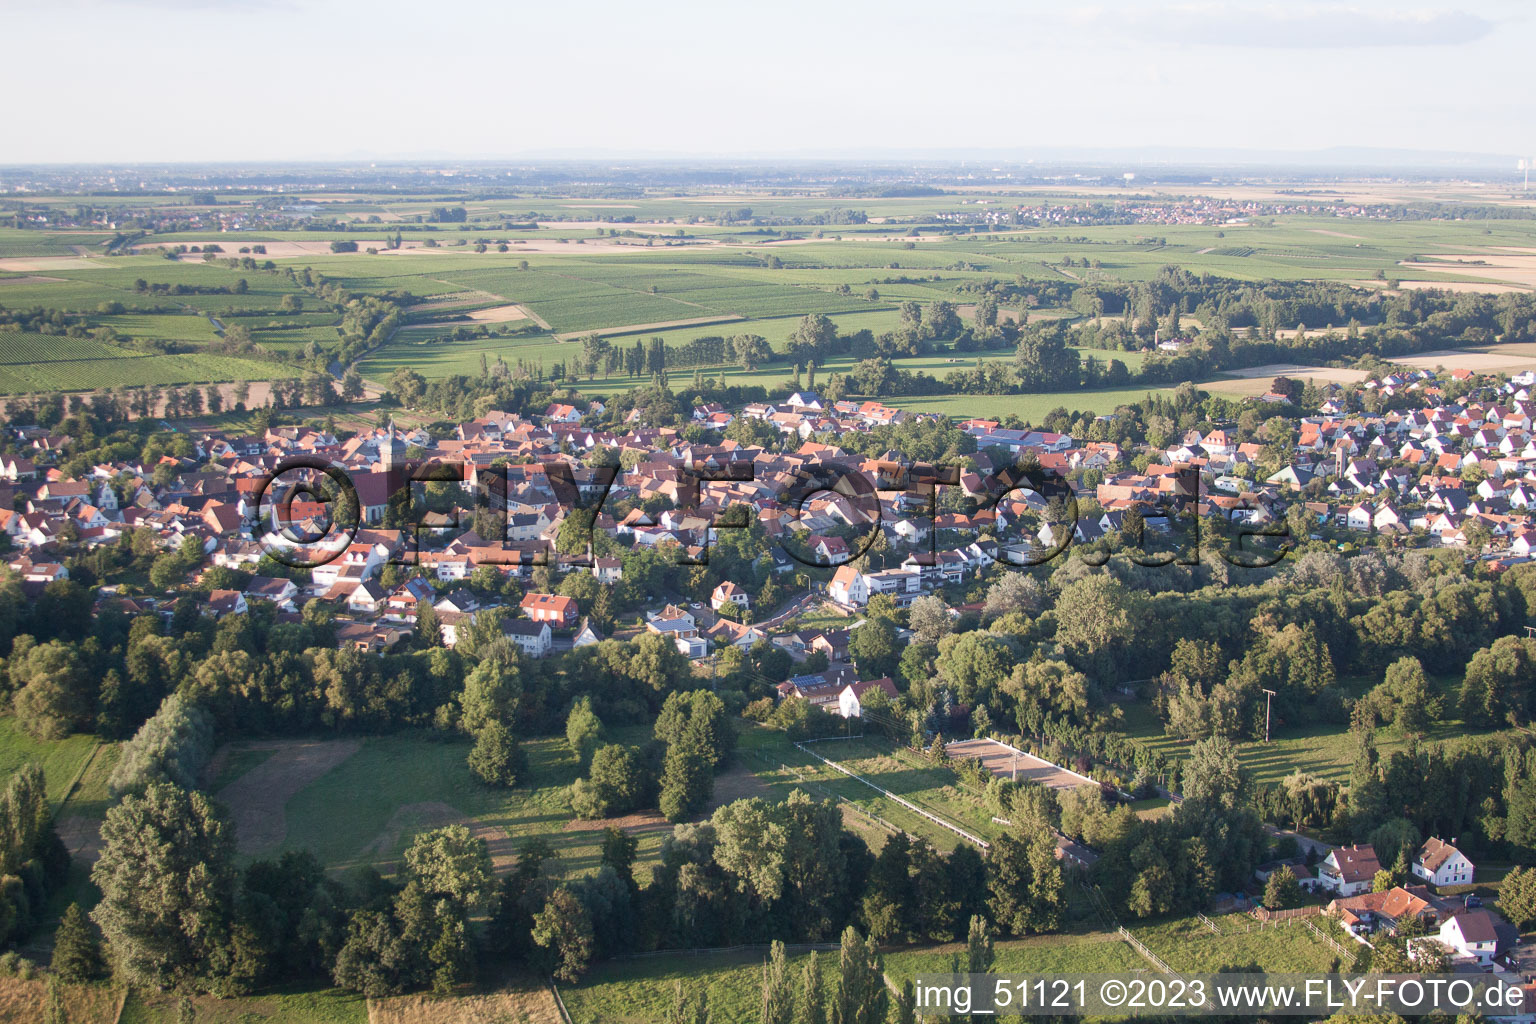 Drone recording of District Billigheim in Billigheim-Ingenheim in the state Rhineland-Palatinate, Germany